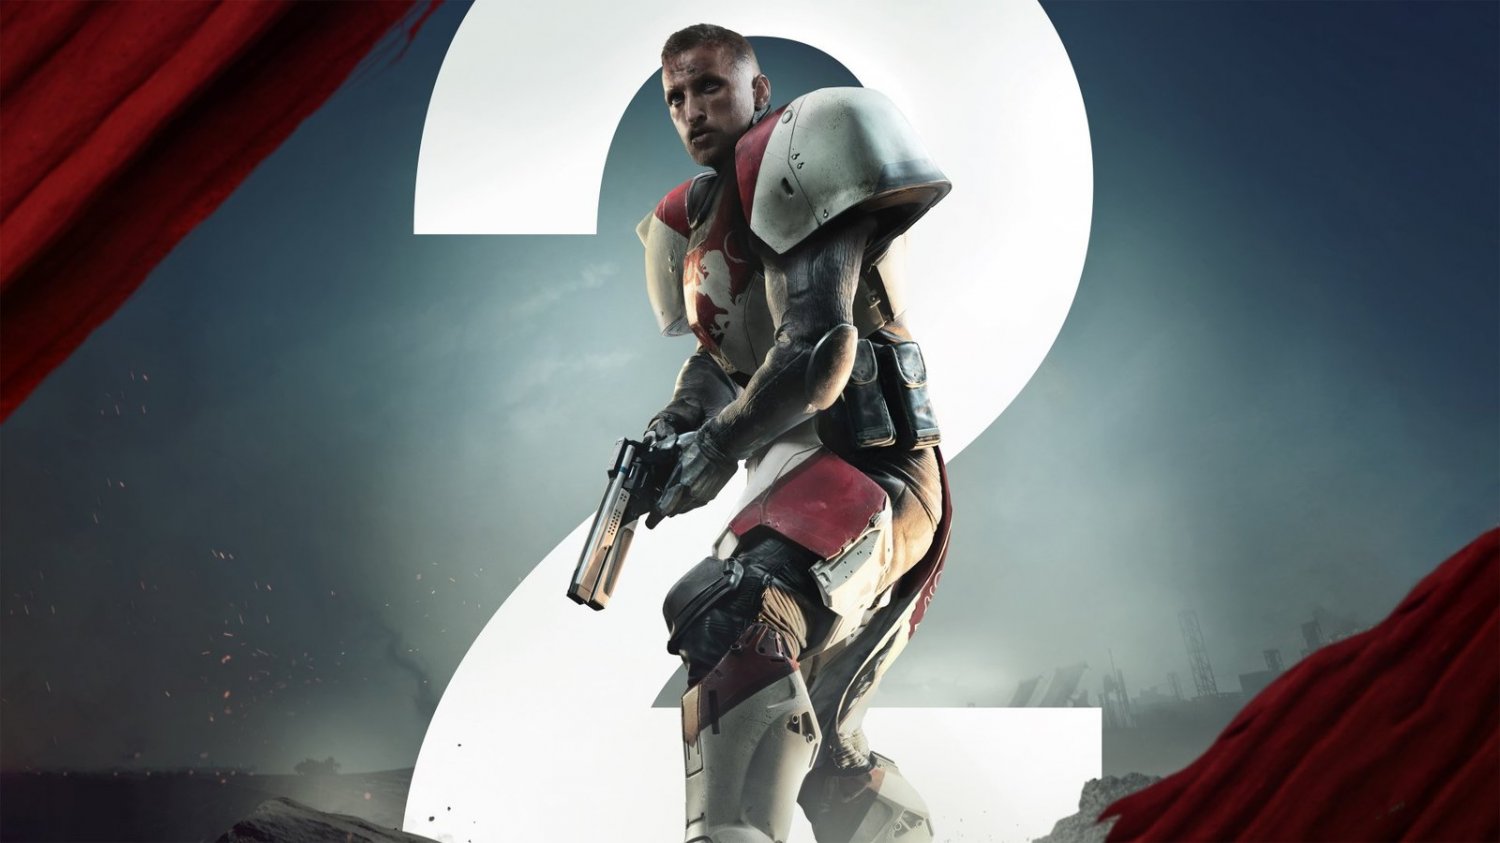 Destiny 2 Game  13"x19" (32cm/49cm) Poster